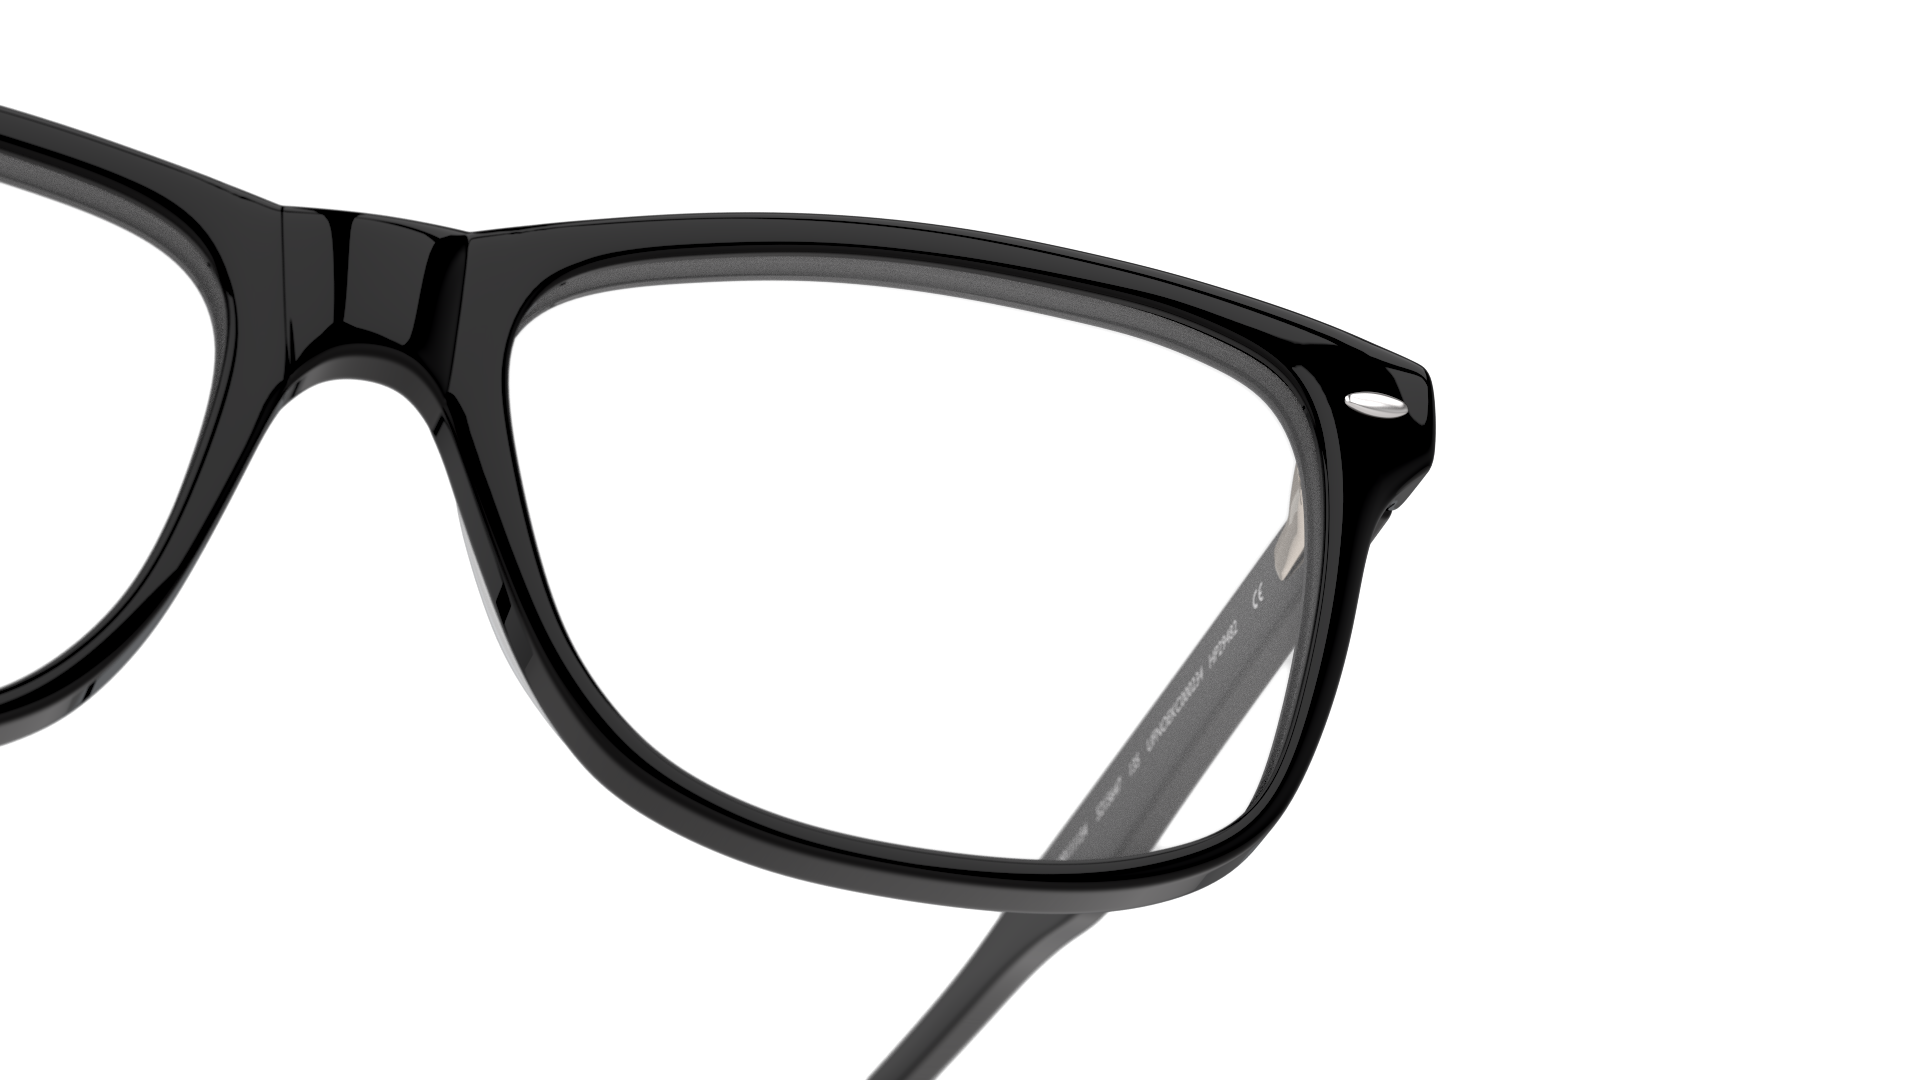 Detail01 Unofficial UNOF0017 Glasses Transparent / Black